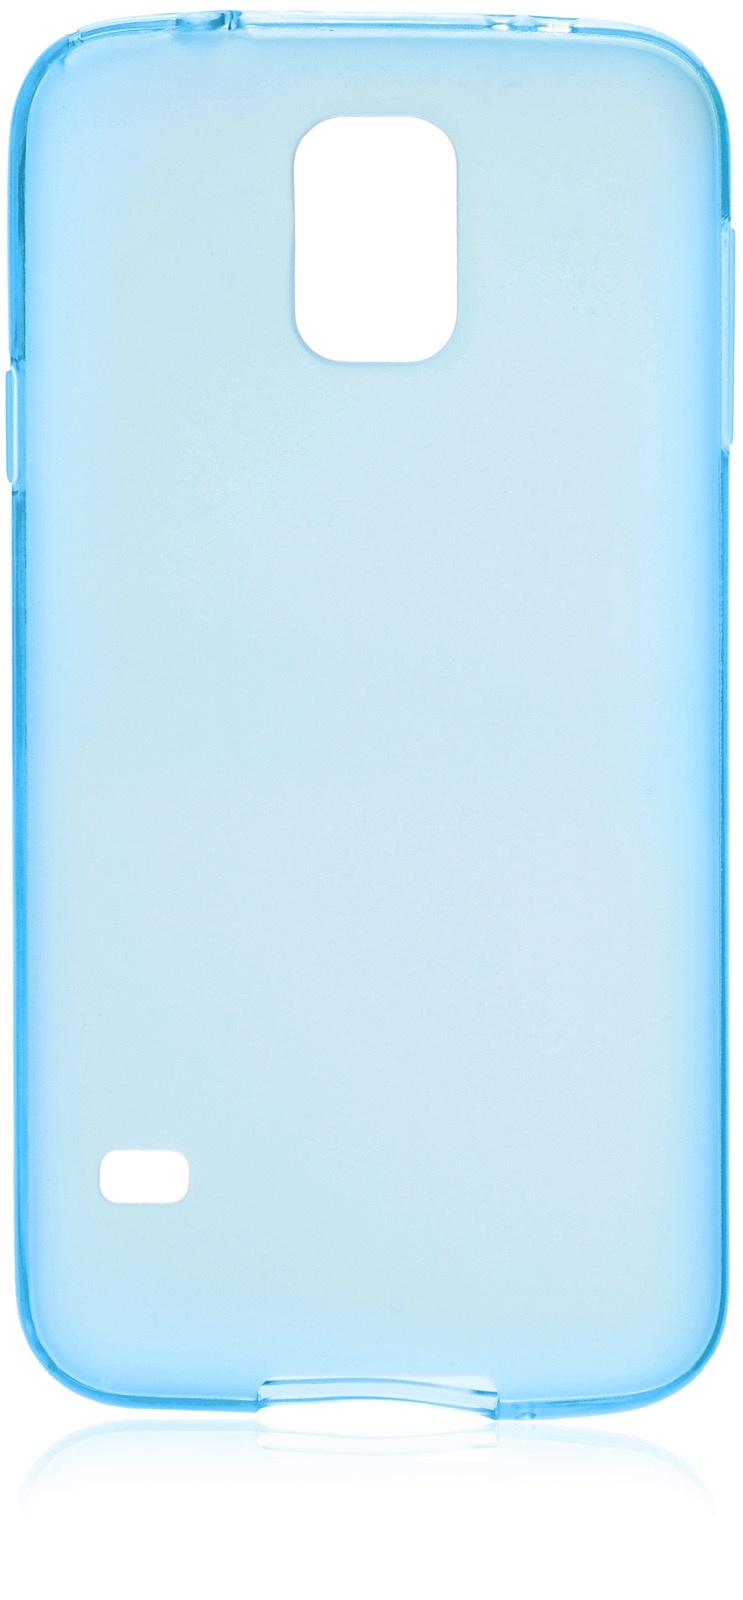 фото Чехол накладка iNeez силикон матовый 530043 для Samsung Galaxy S5,530043,синий